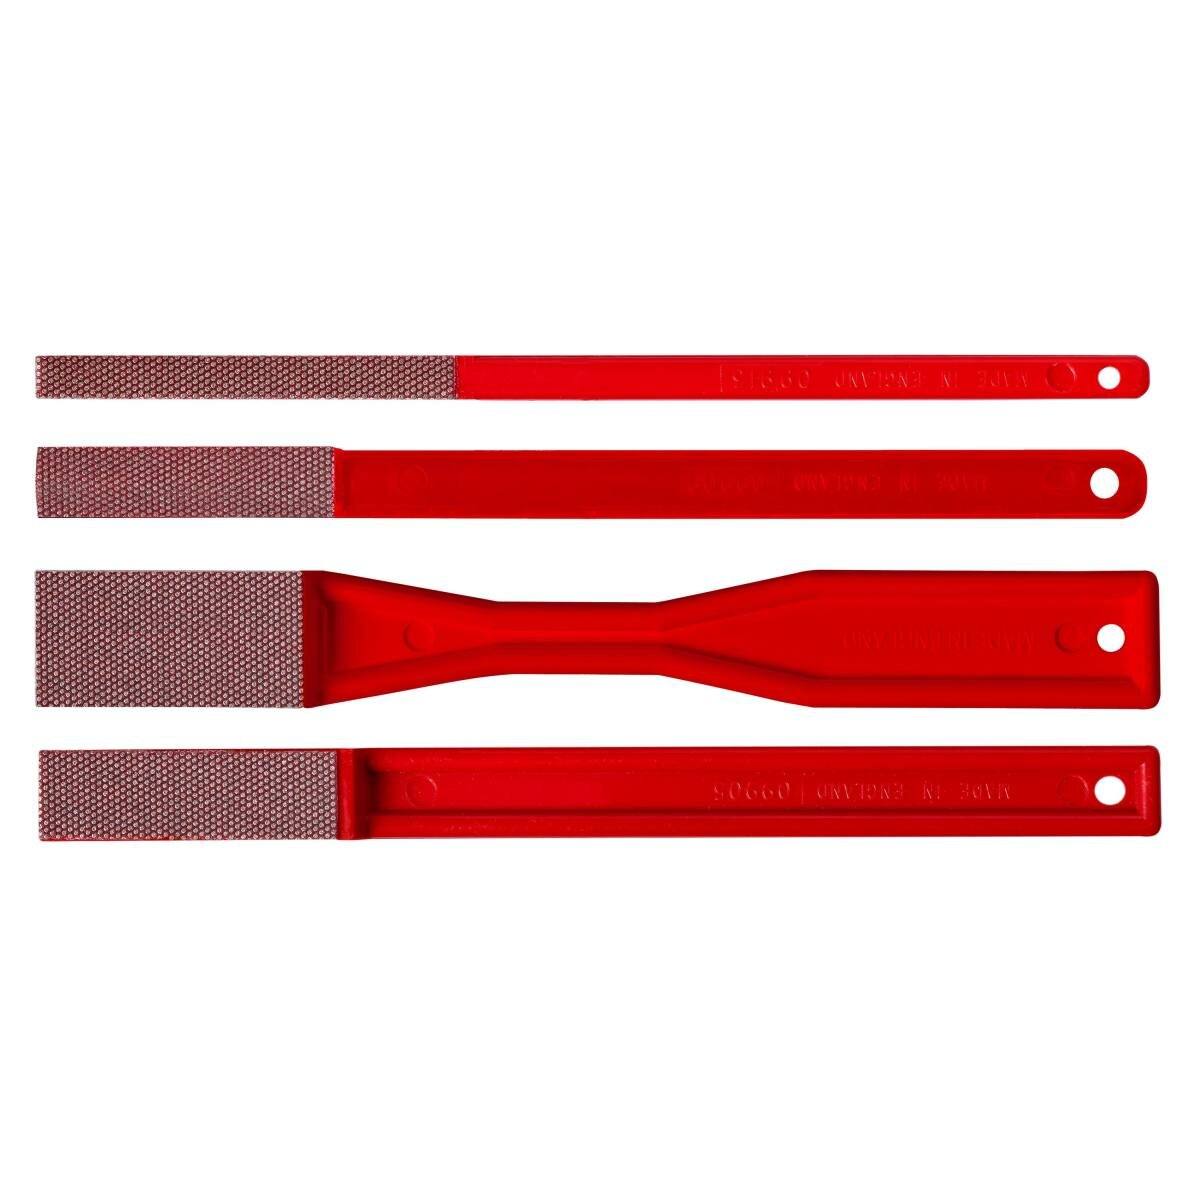 3M Joustava timanttiviila 6210J, punainen, sarja sisältää 1 kpl nro 1 19 mm x 33 mm, nro 2 12 mm x 44 mm, nro 3 12 mm x 44 mm, nro 4 6 mm x 62 mm, N74 #65314